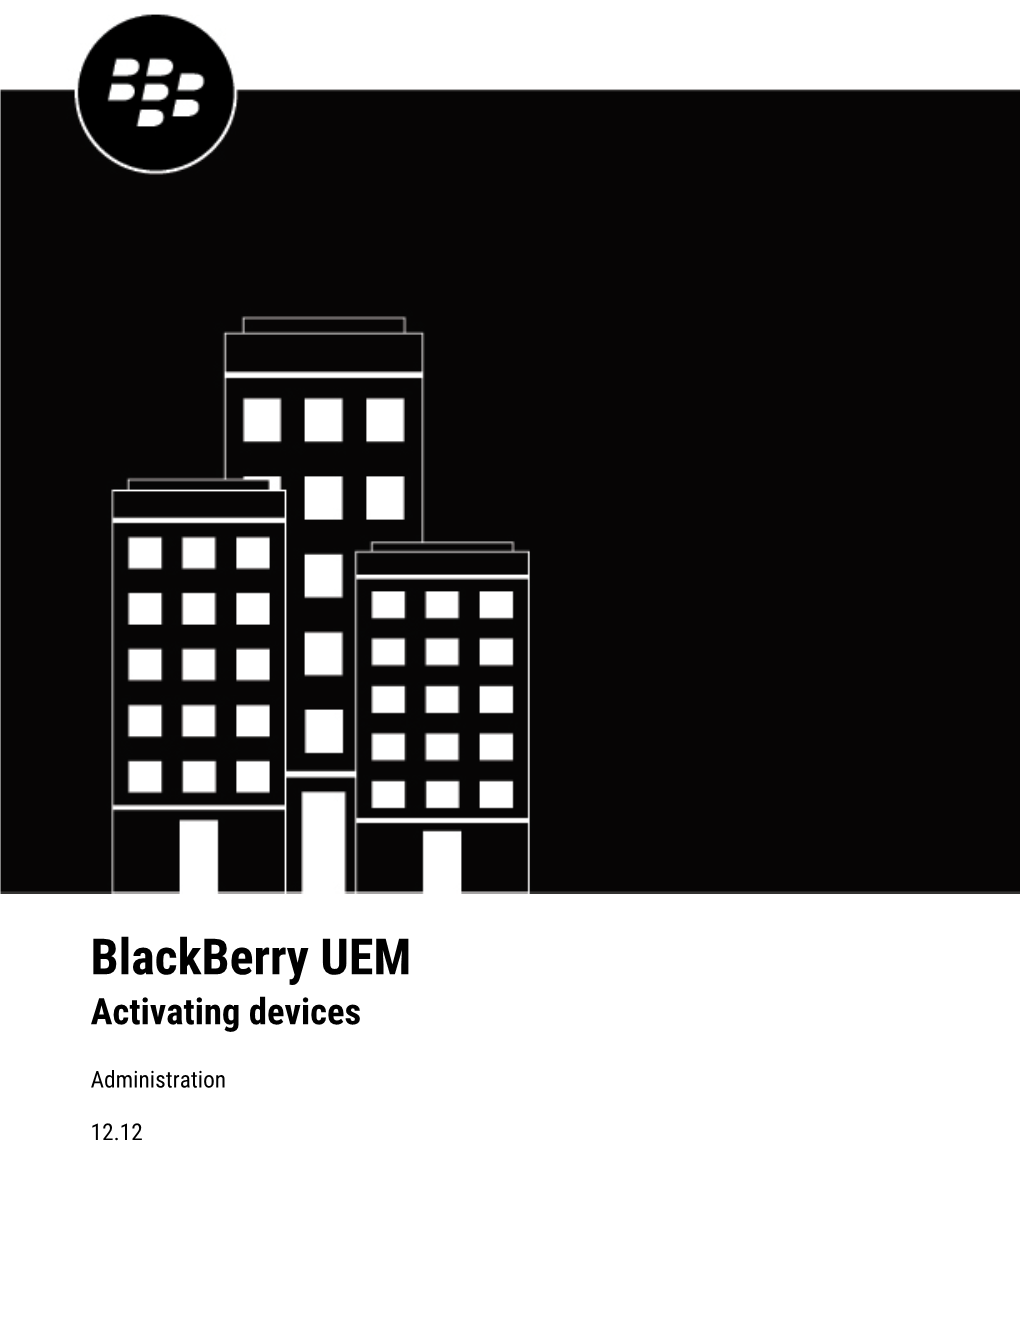 Blackberry UEM Activating Devices